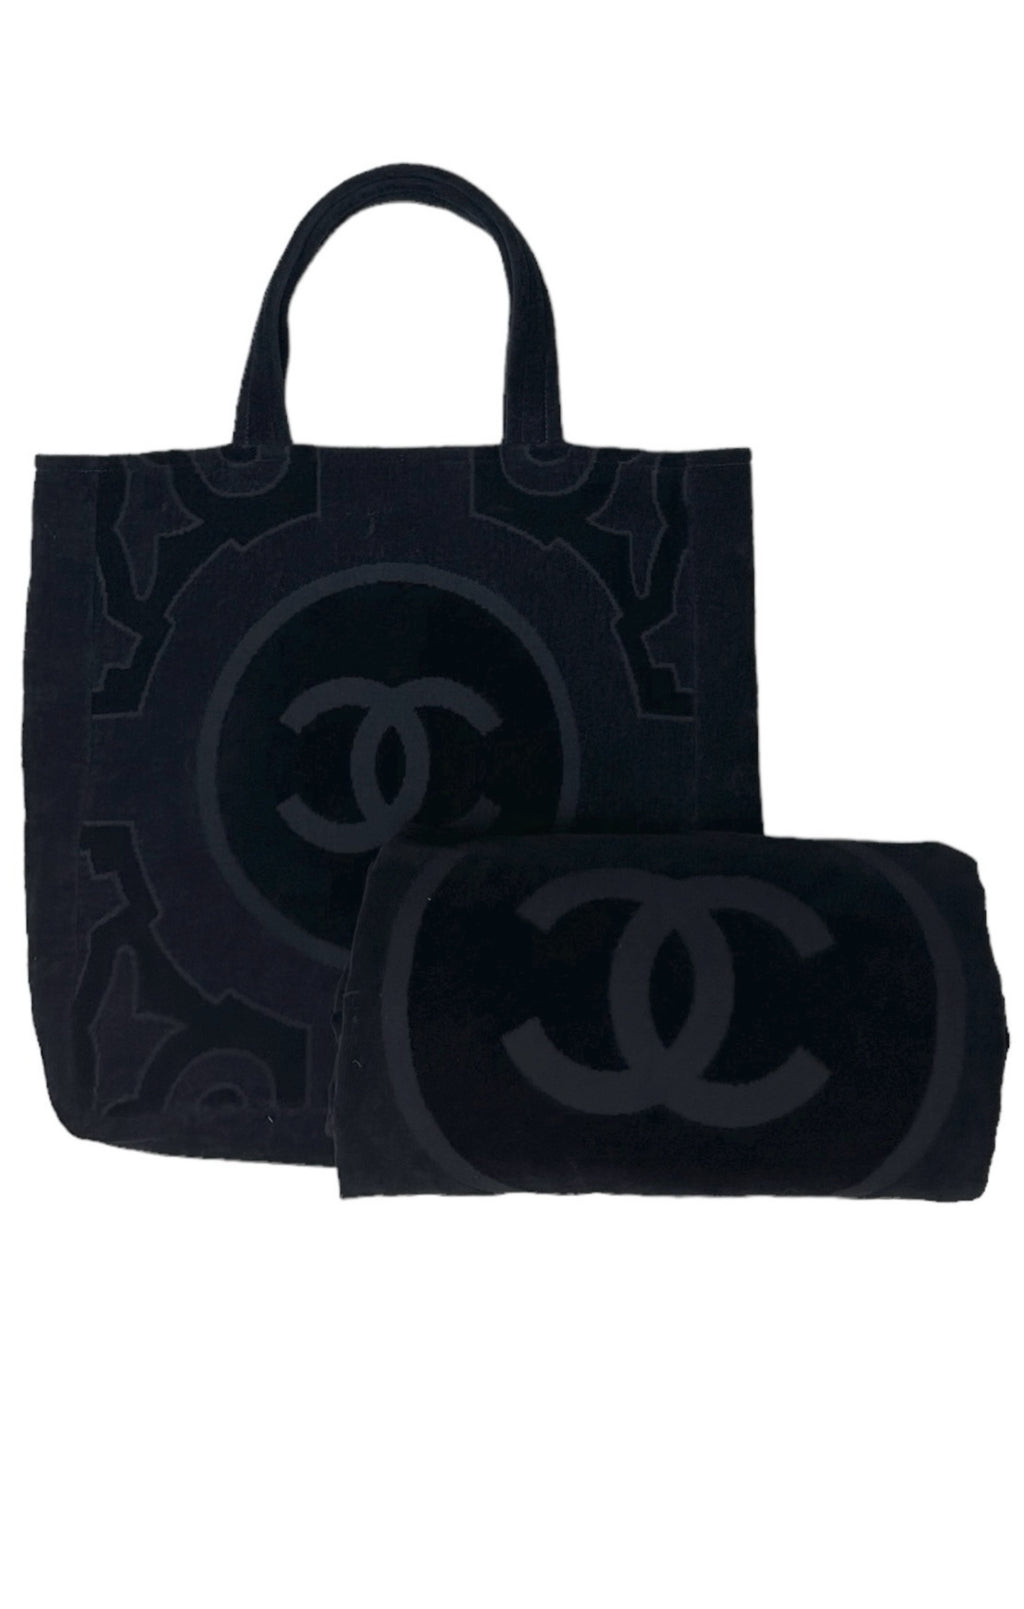 VINTAGE CHANEL (RARE) Tote Bag & Towel Set Size: Bag - 17" x 4" x 18"; 8.75" drop handle Towel - 46.5" x 70"